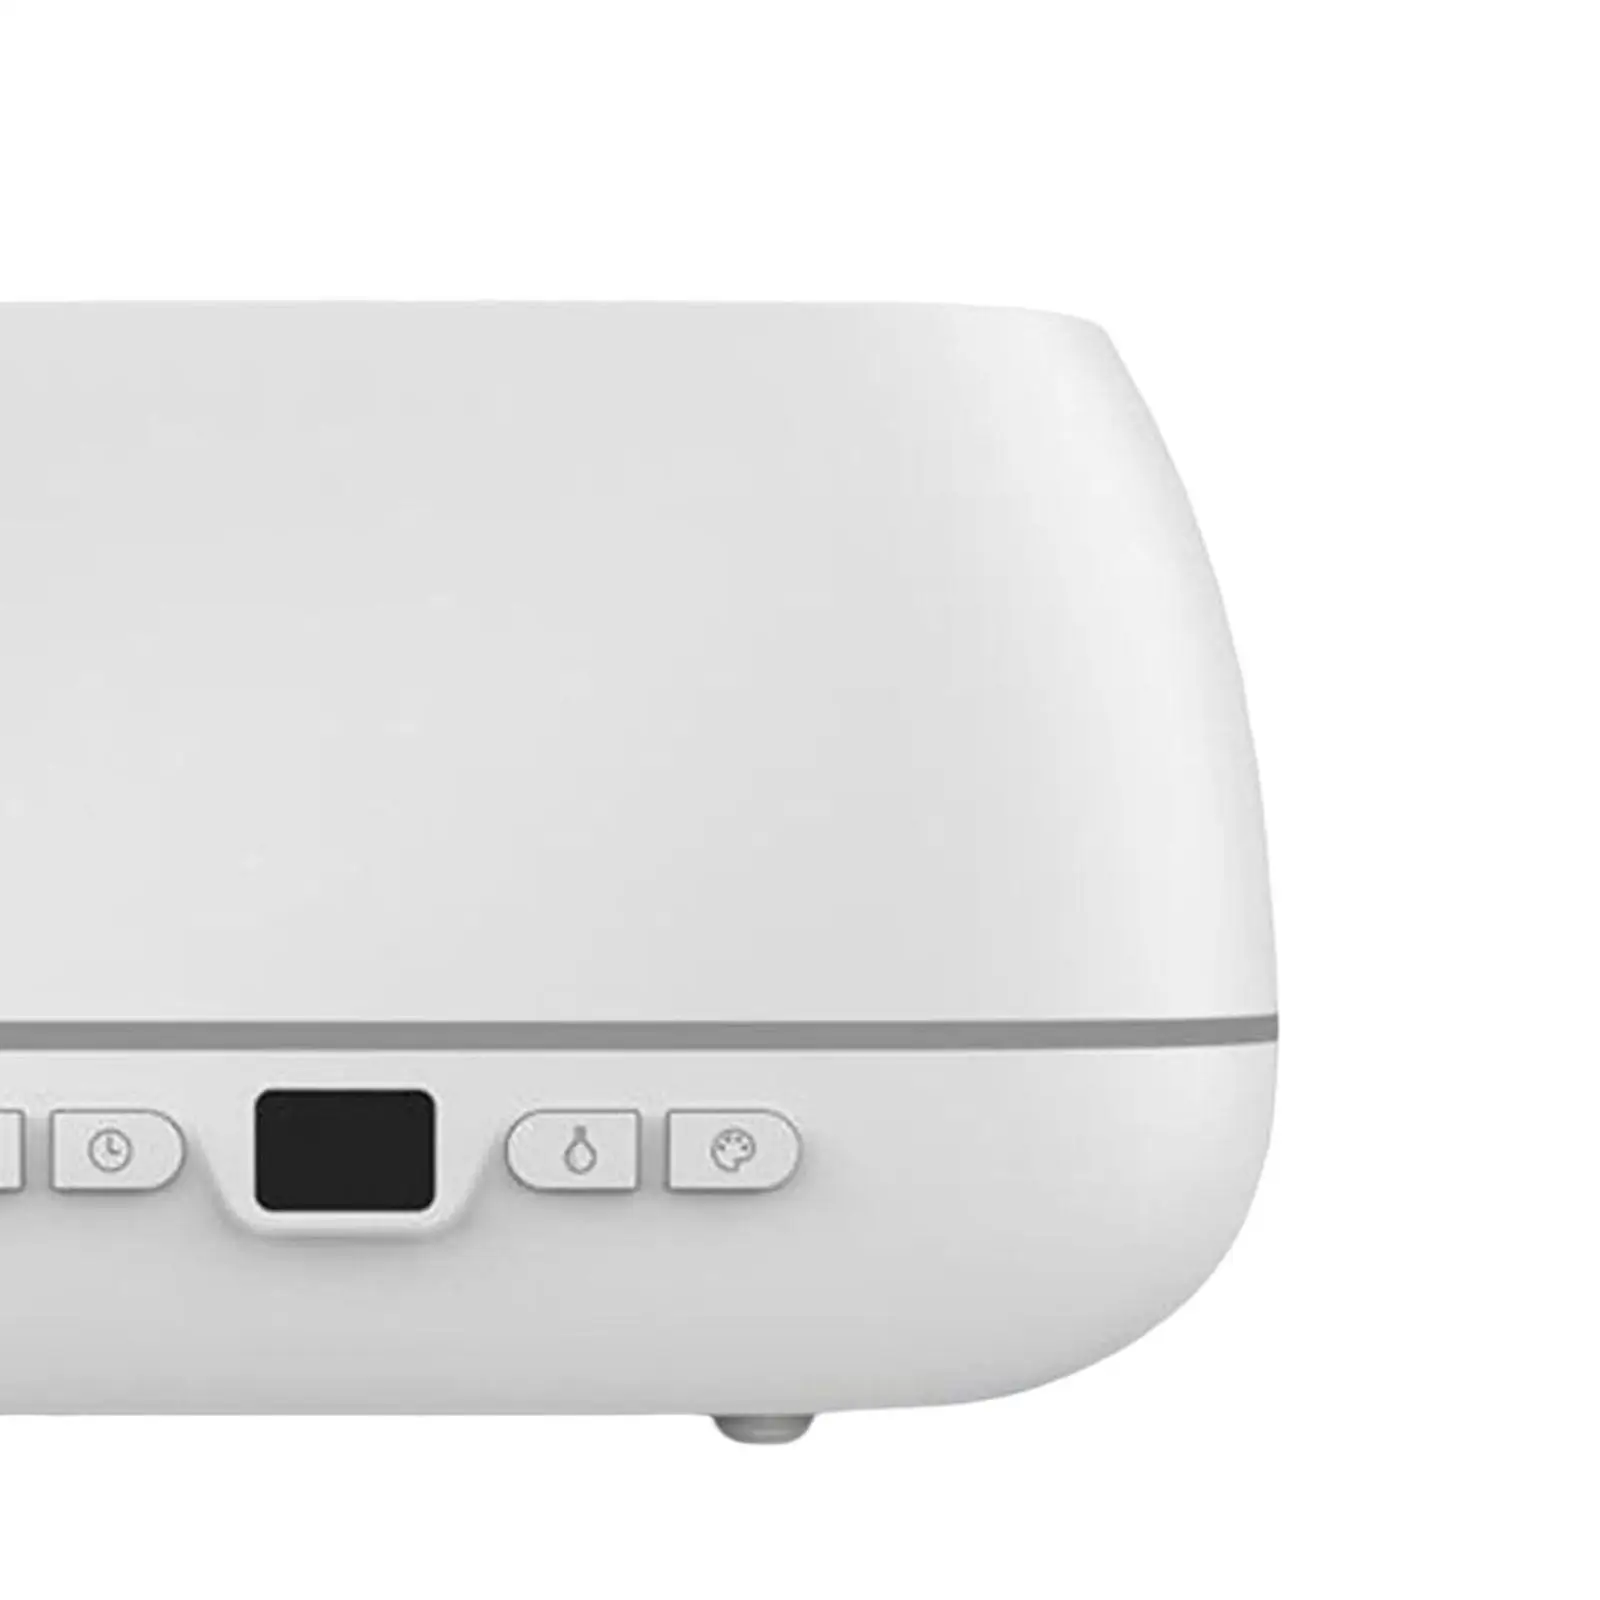 LED Humidifier Diffuser Remote Control Portable USB for Bedroom Desktop